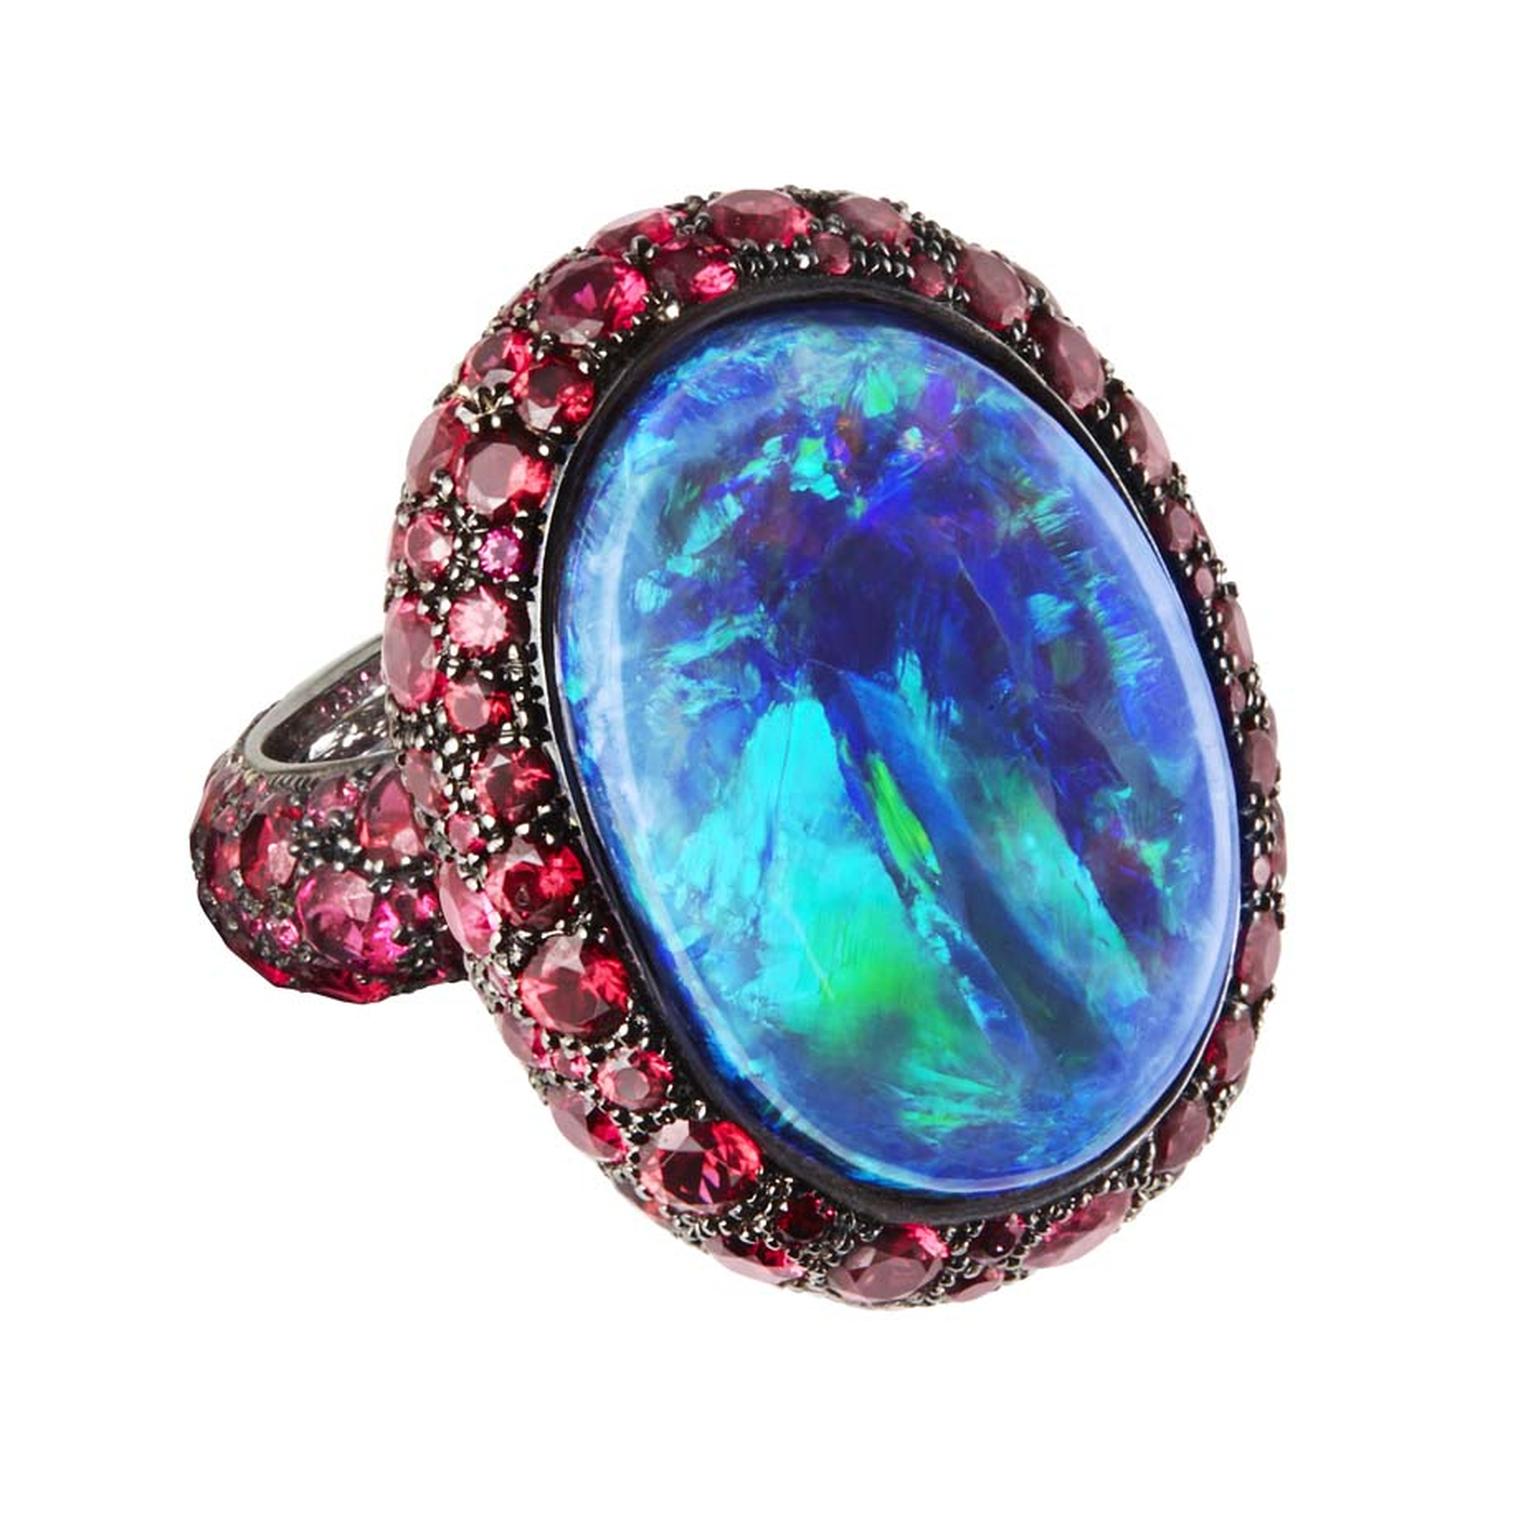 Katherine Jetter Scarlett opal ring set with a central Boulder opal.